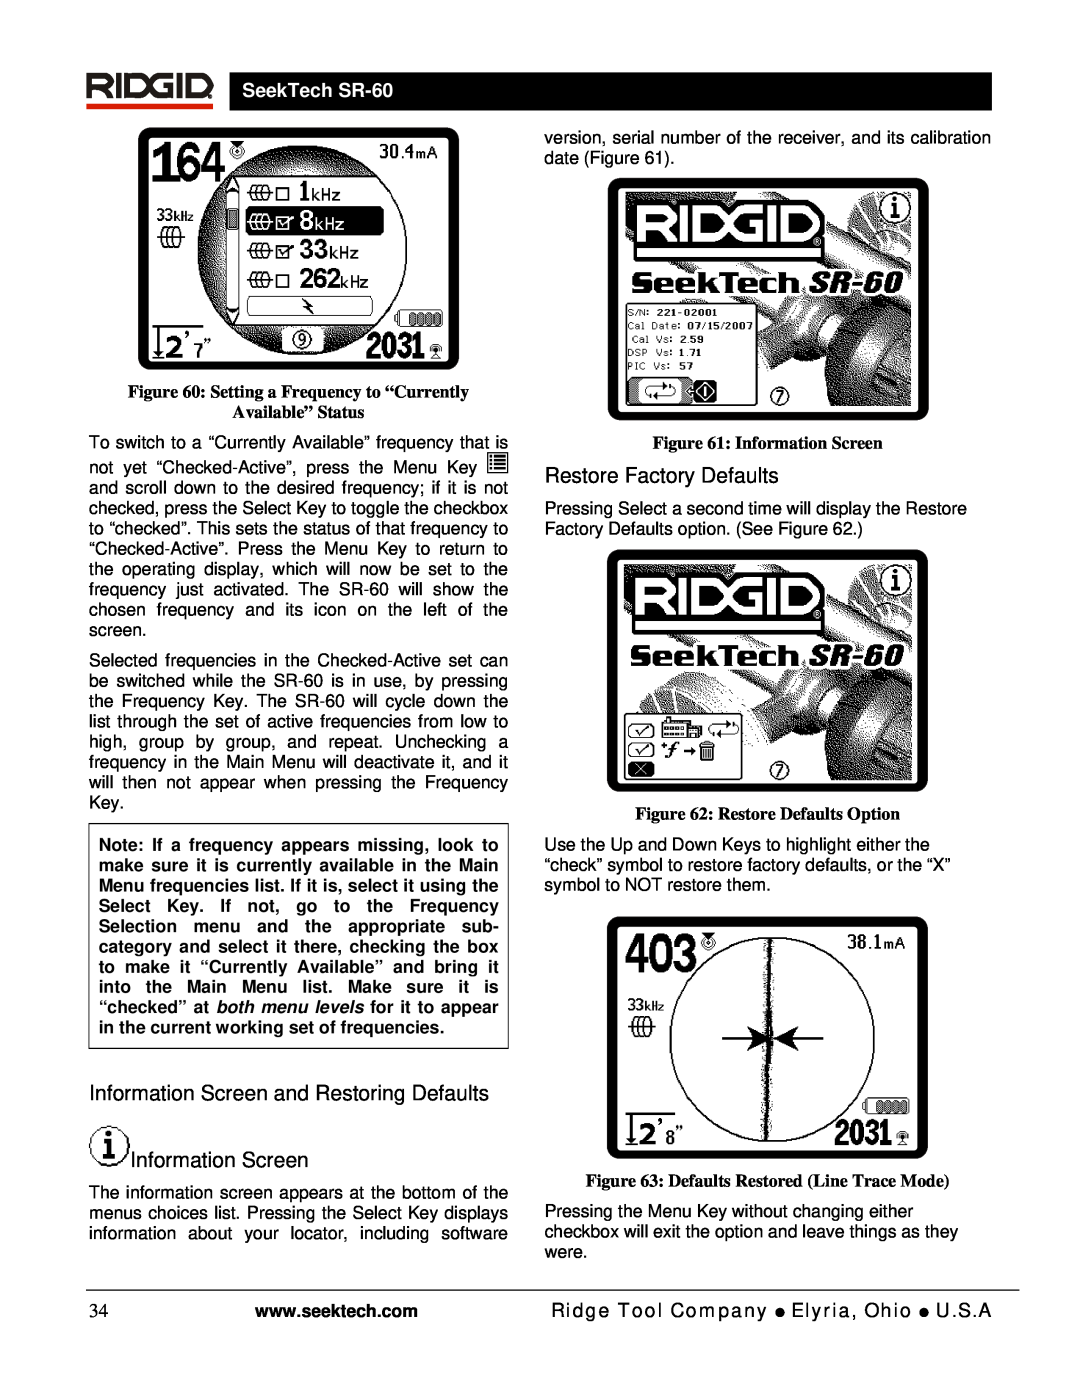 RIDGID manual Information Screen and Restoring Defaults Information Screen, Restore Factory Defaults, SeekTech SR-60 